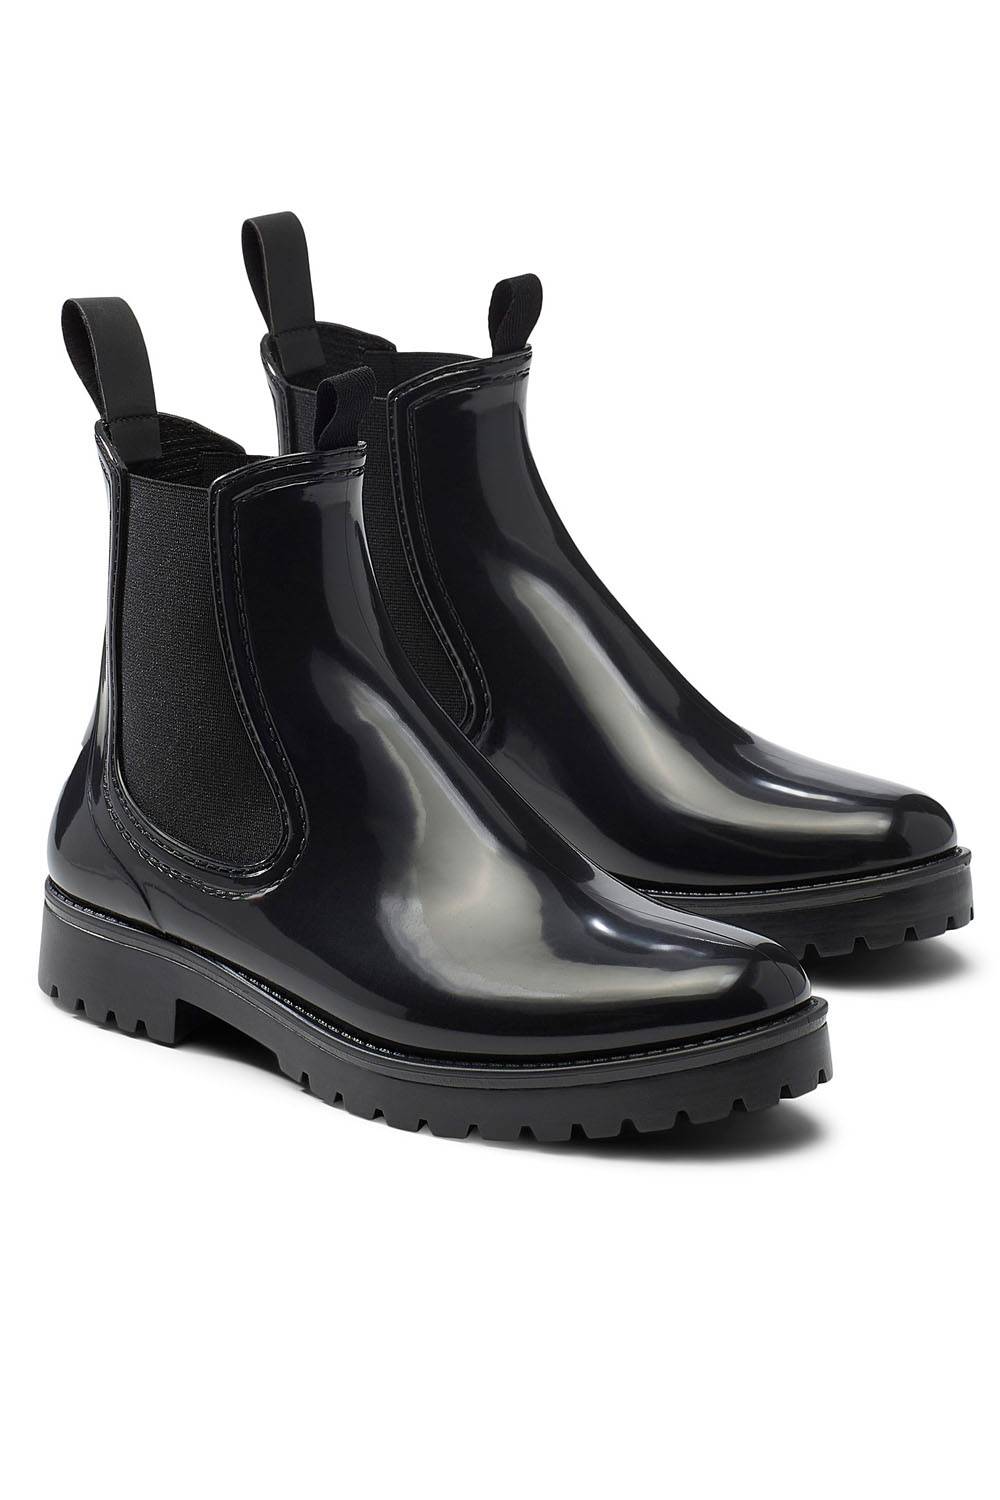 simons eco-friendly rain boots